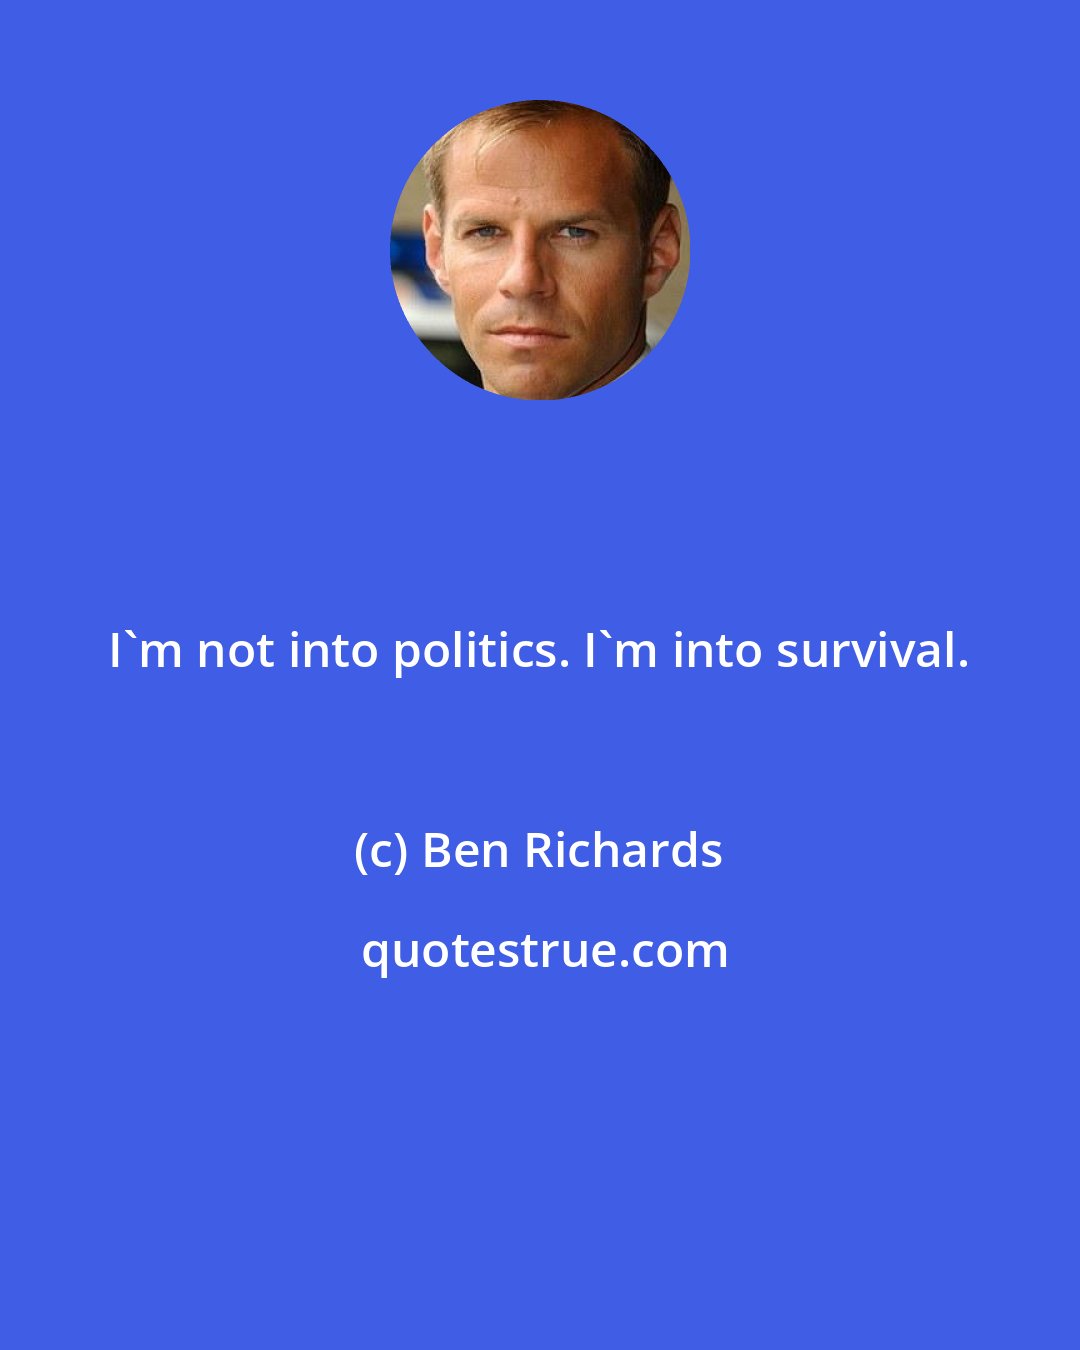 Ben Richards: I'm not into politics. I'm into survival.